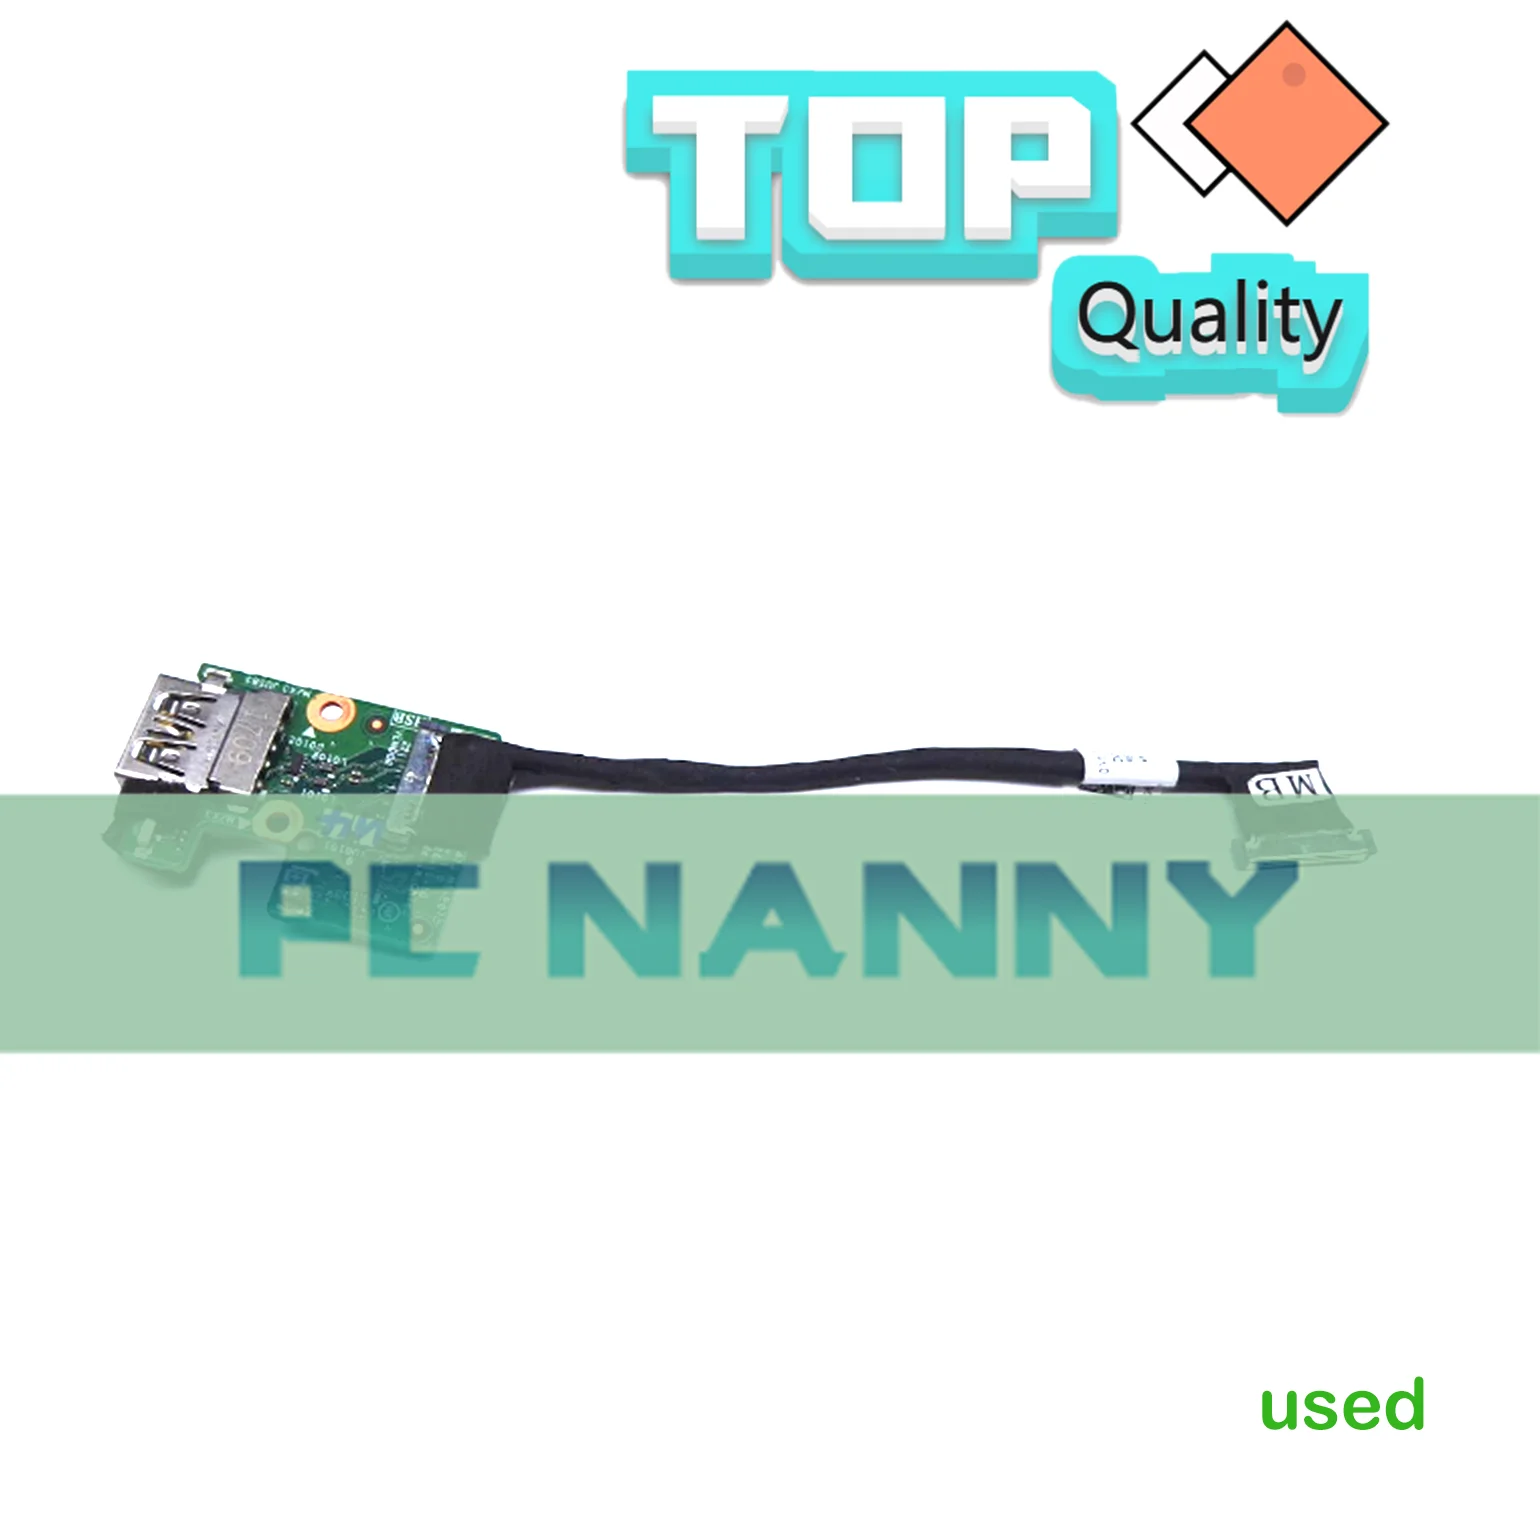 PCNANNY для Lenovo ThinkPad Серии T470P плата кнопки питания USB Внутренняя плата 01AV908 NS-B072 NS-B071 0